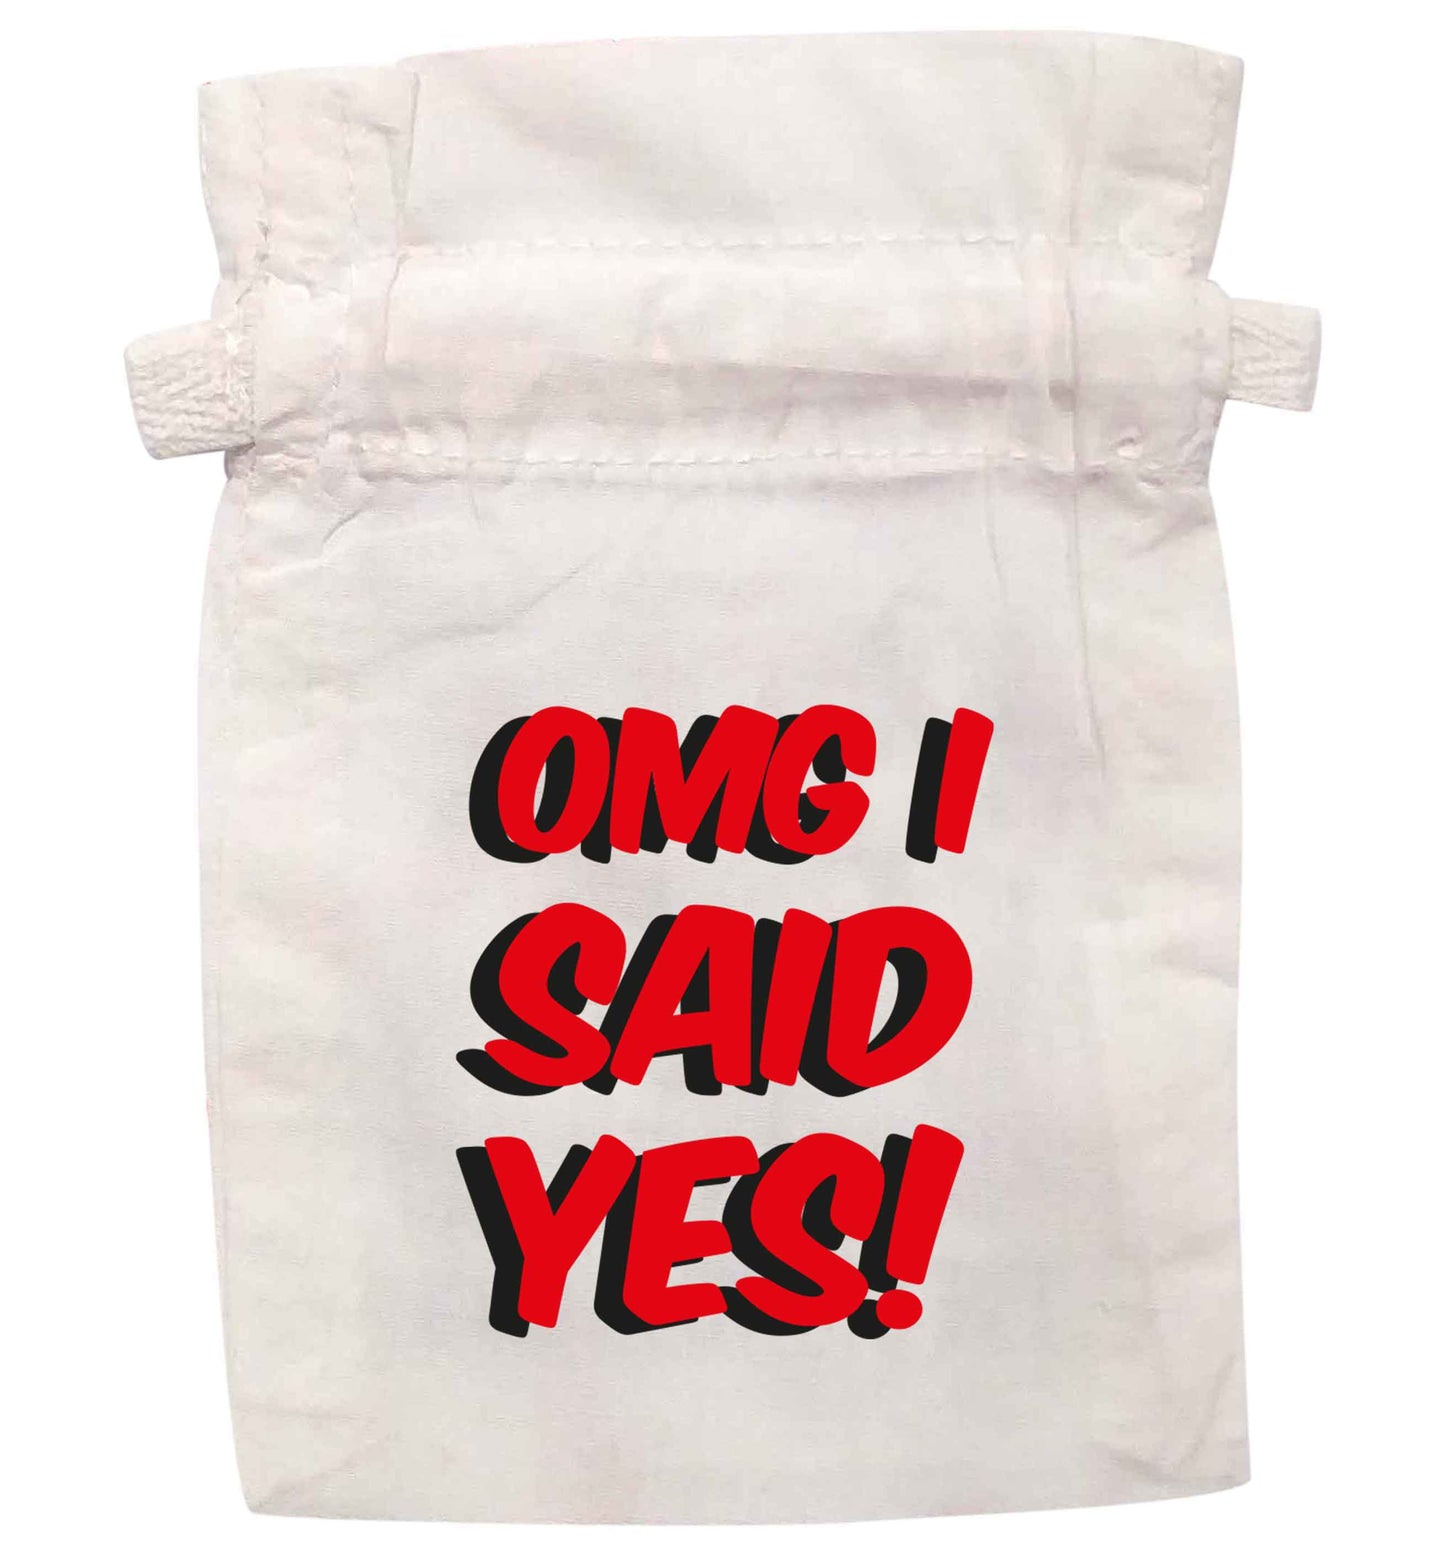 Omg I said yes | XS - L | Pouch / Drawstring bag / Sack | Organic Cotton | Bulk discounts available!